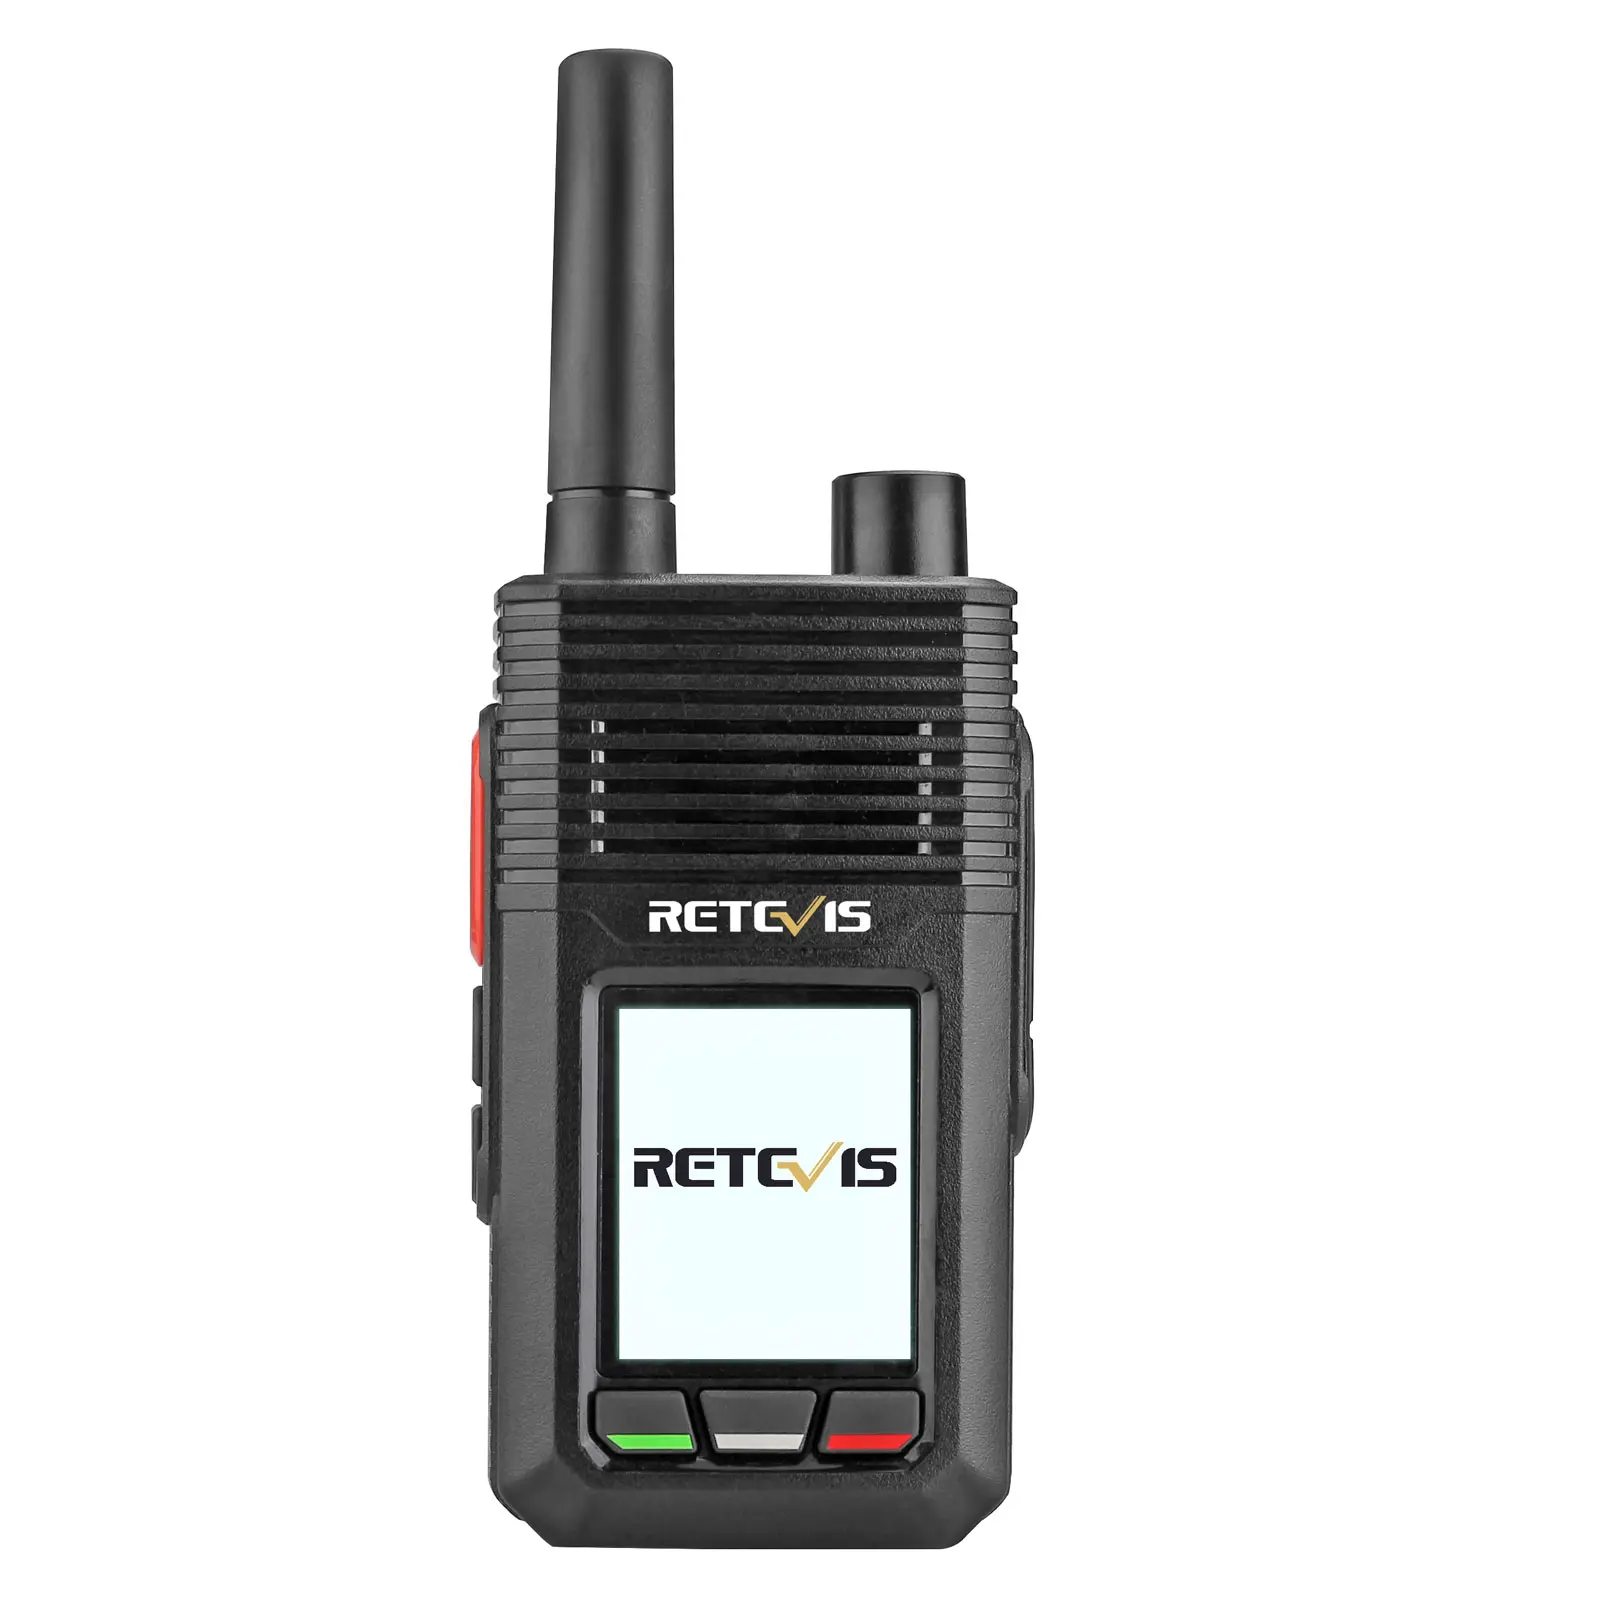 

Retevis RB20 EU 4g POC walkie talkie handset Radio LTE Smartphone gsm walkie talkie with GPS function support 2G/3G/4G network